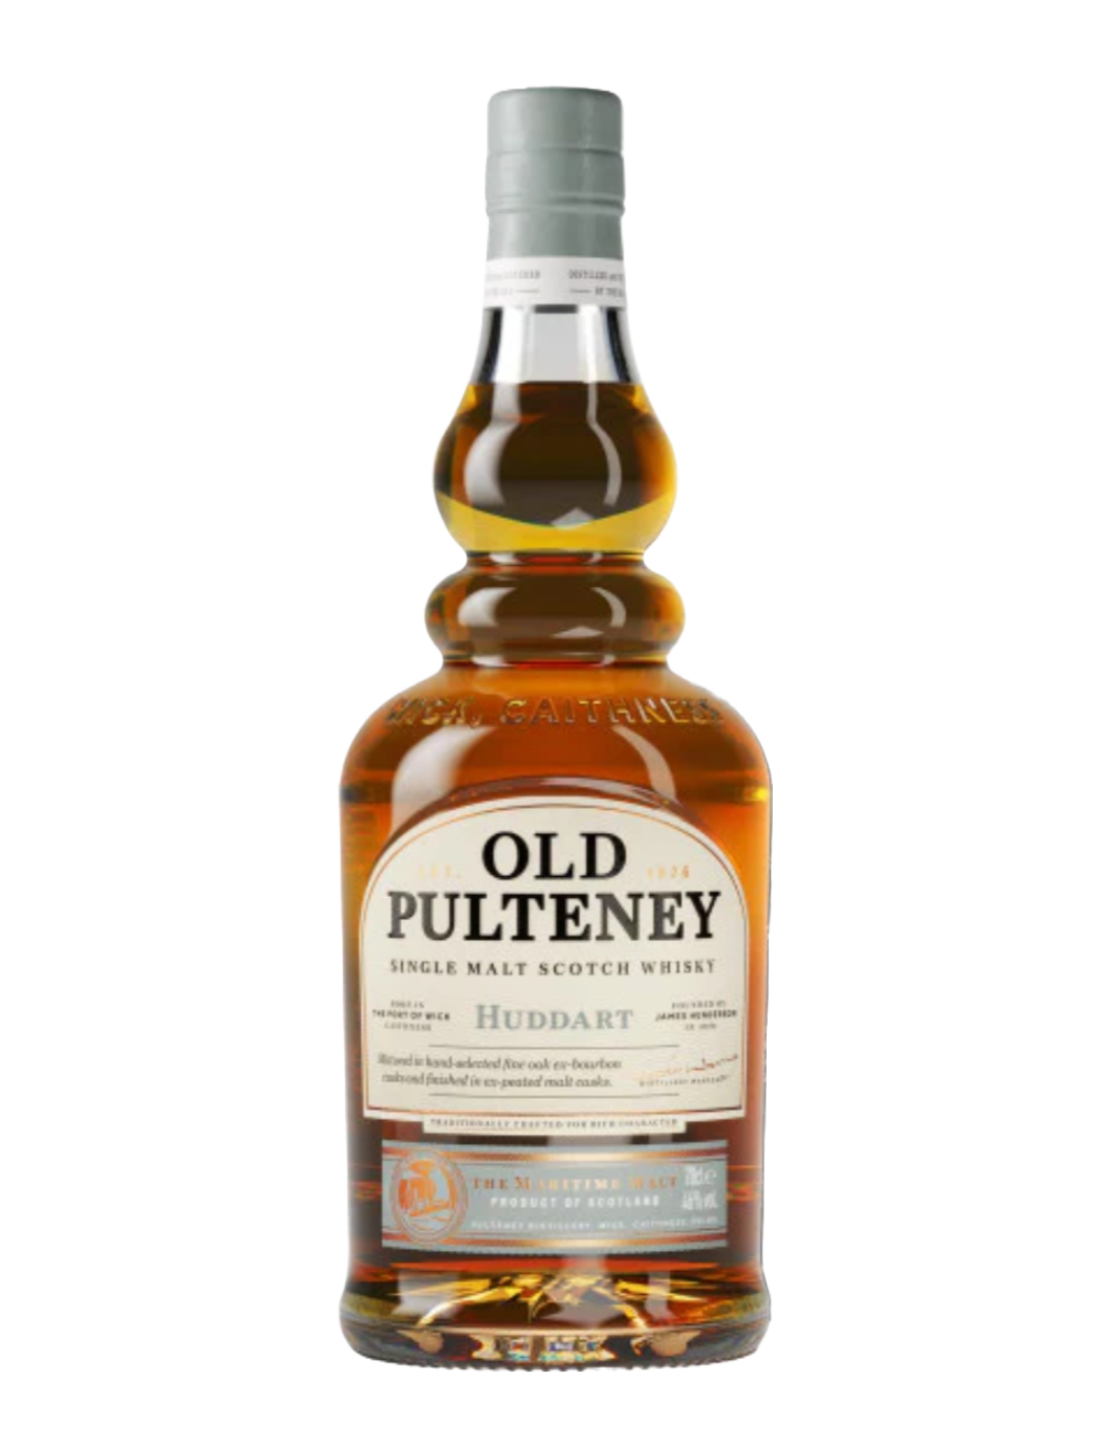 An elegant bottle of Old Pulteney Huddart Single Malt Scotch in front of a plain white background